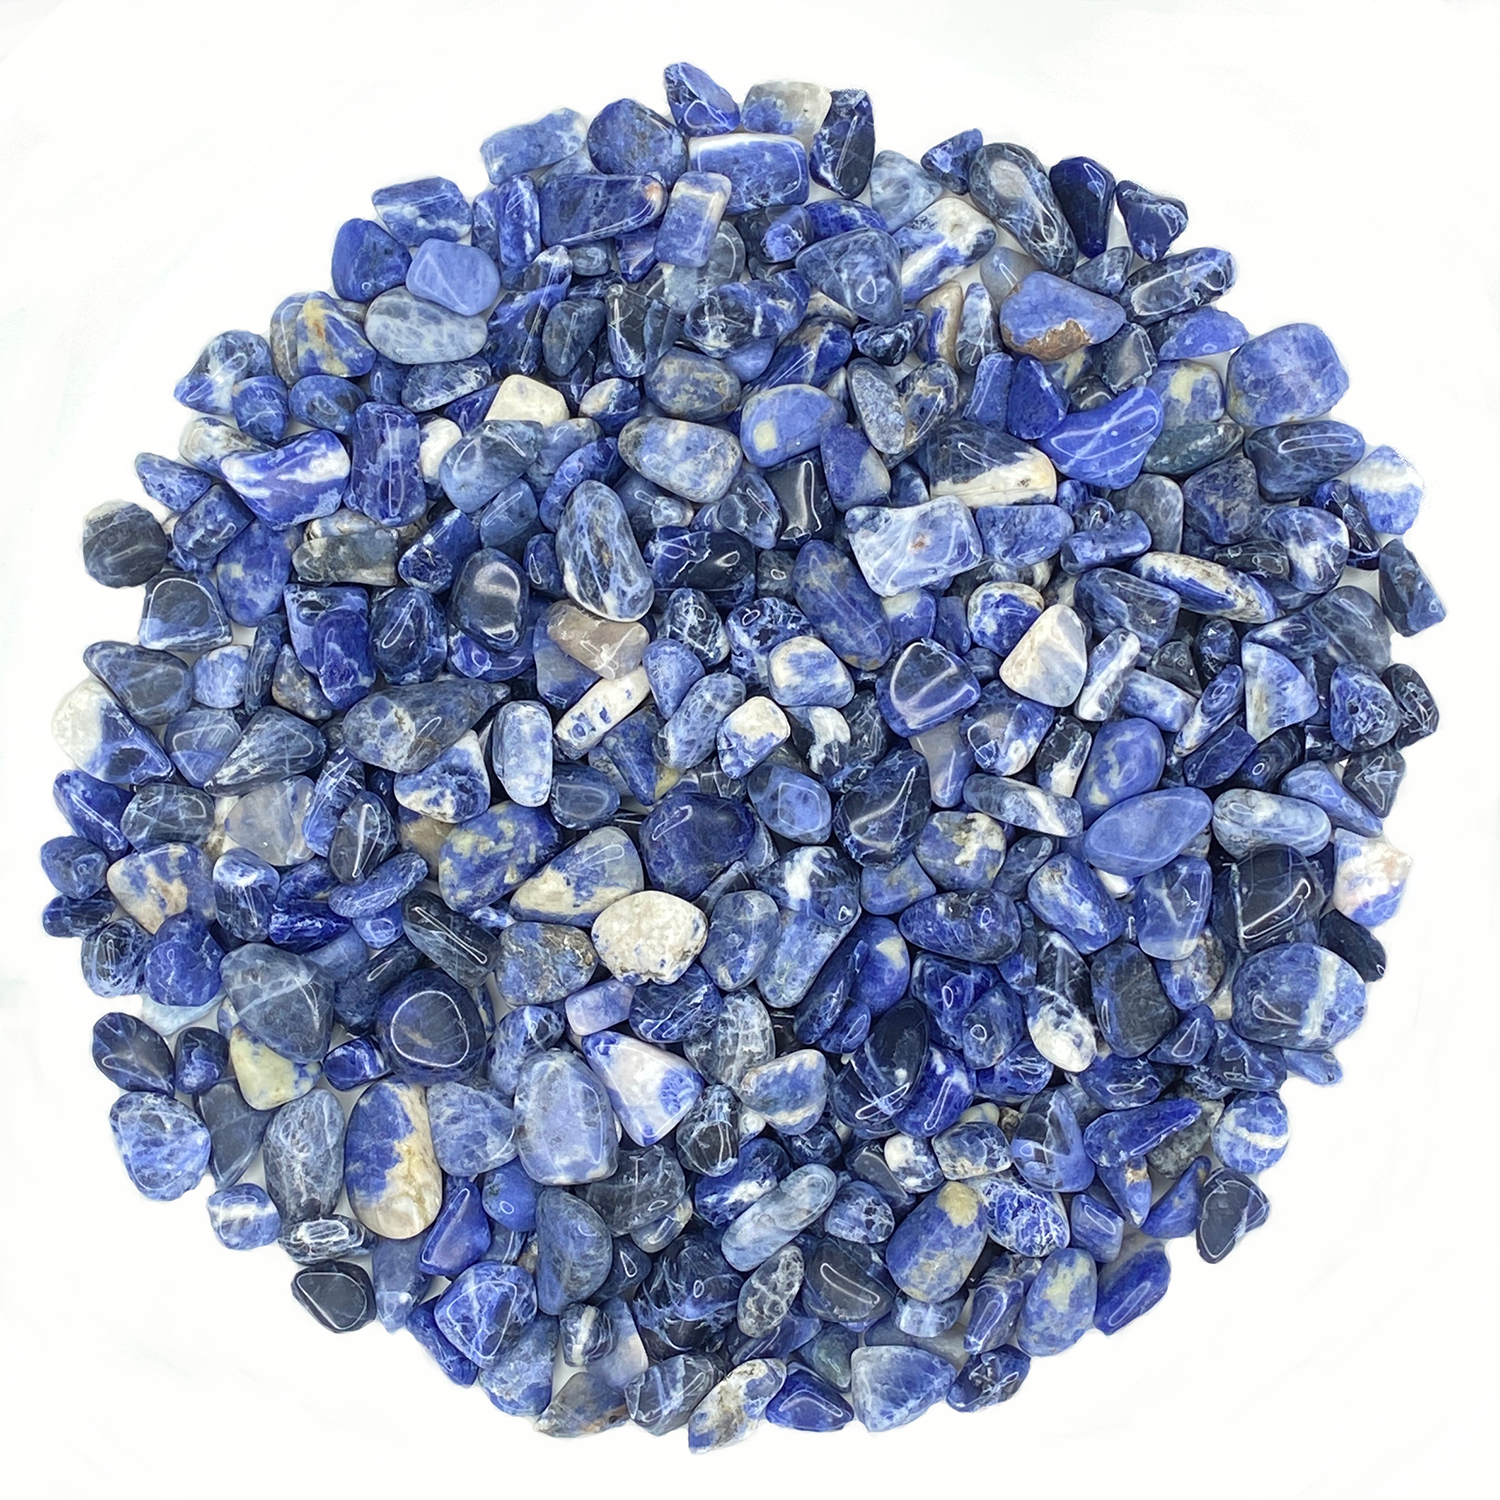 Bulk Tumbled Stone - Small - Blue Sodalite from Brazil